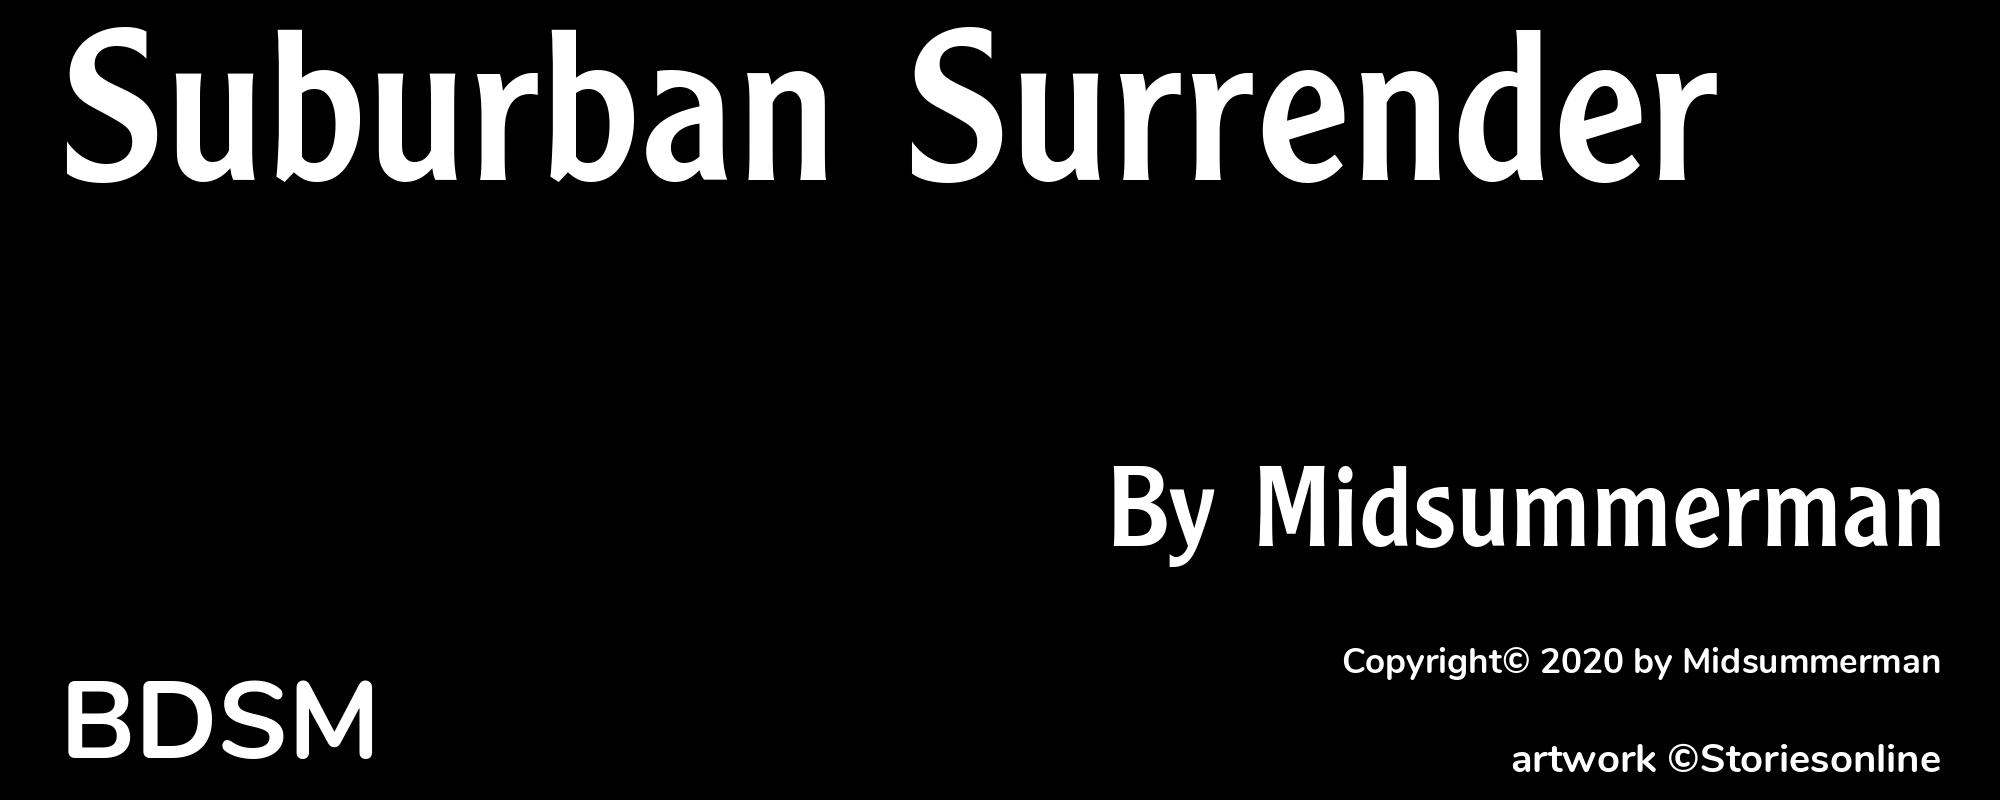 Suburban Surrender - Cover